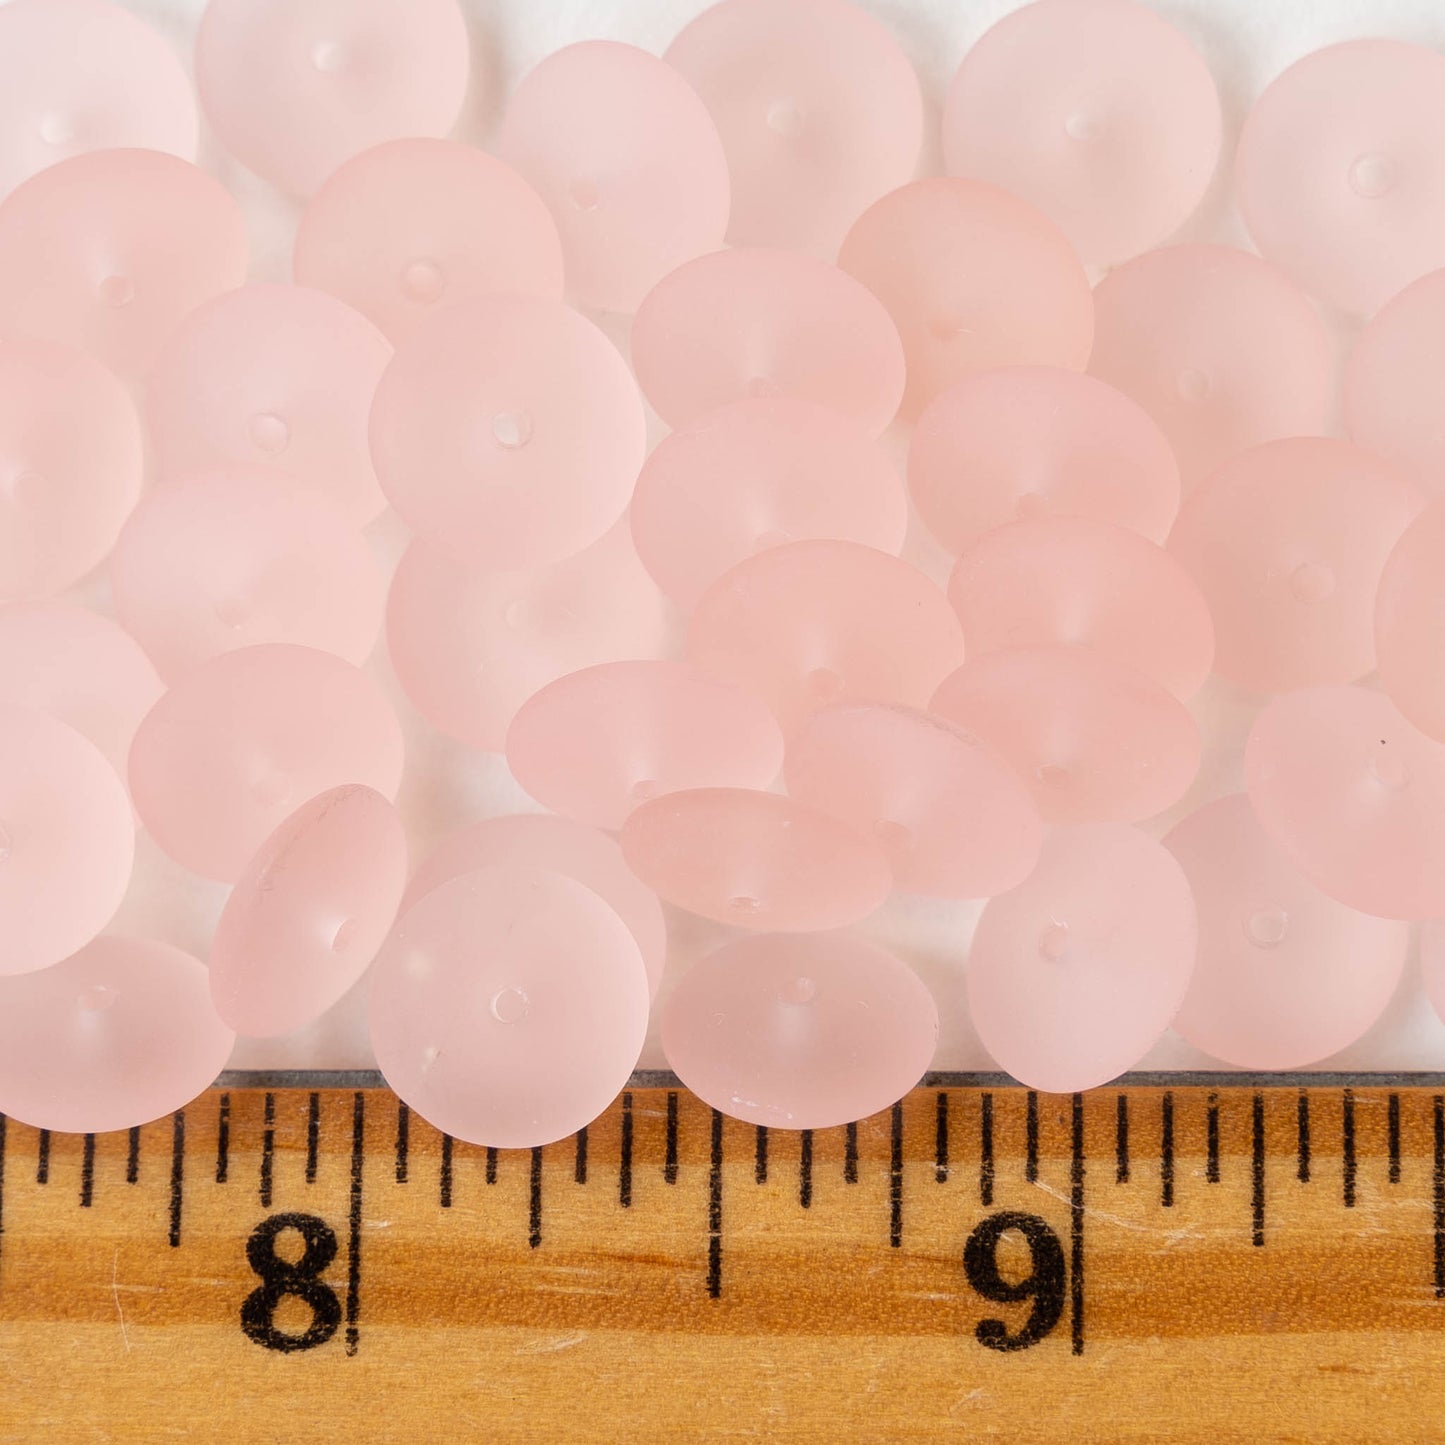 10mm Rondelle Beads - Rosaline Pink Matte  - 30 Beads